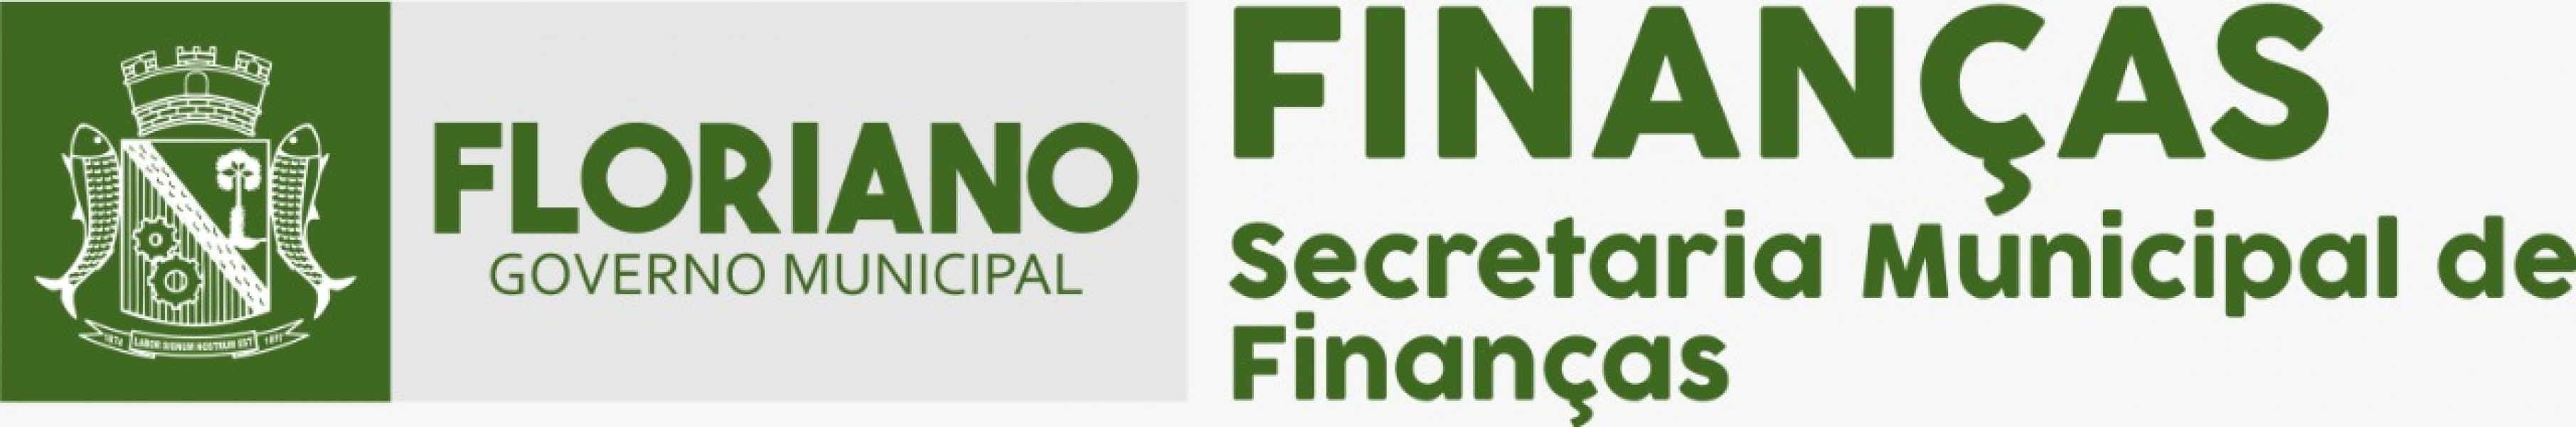 Secretaria de Finanças de Floriano disponibiliza números de atendimento por telefone